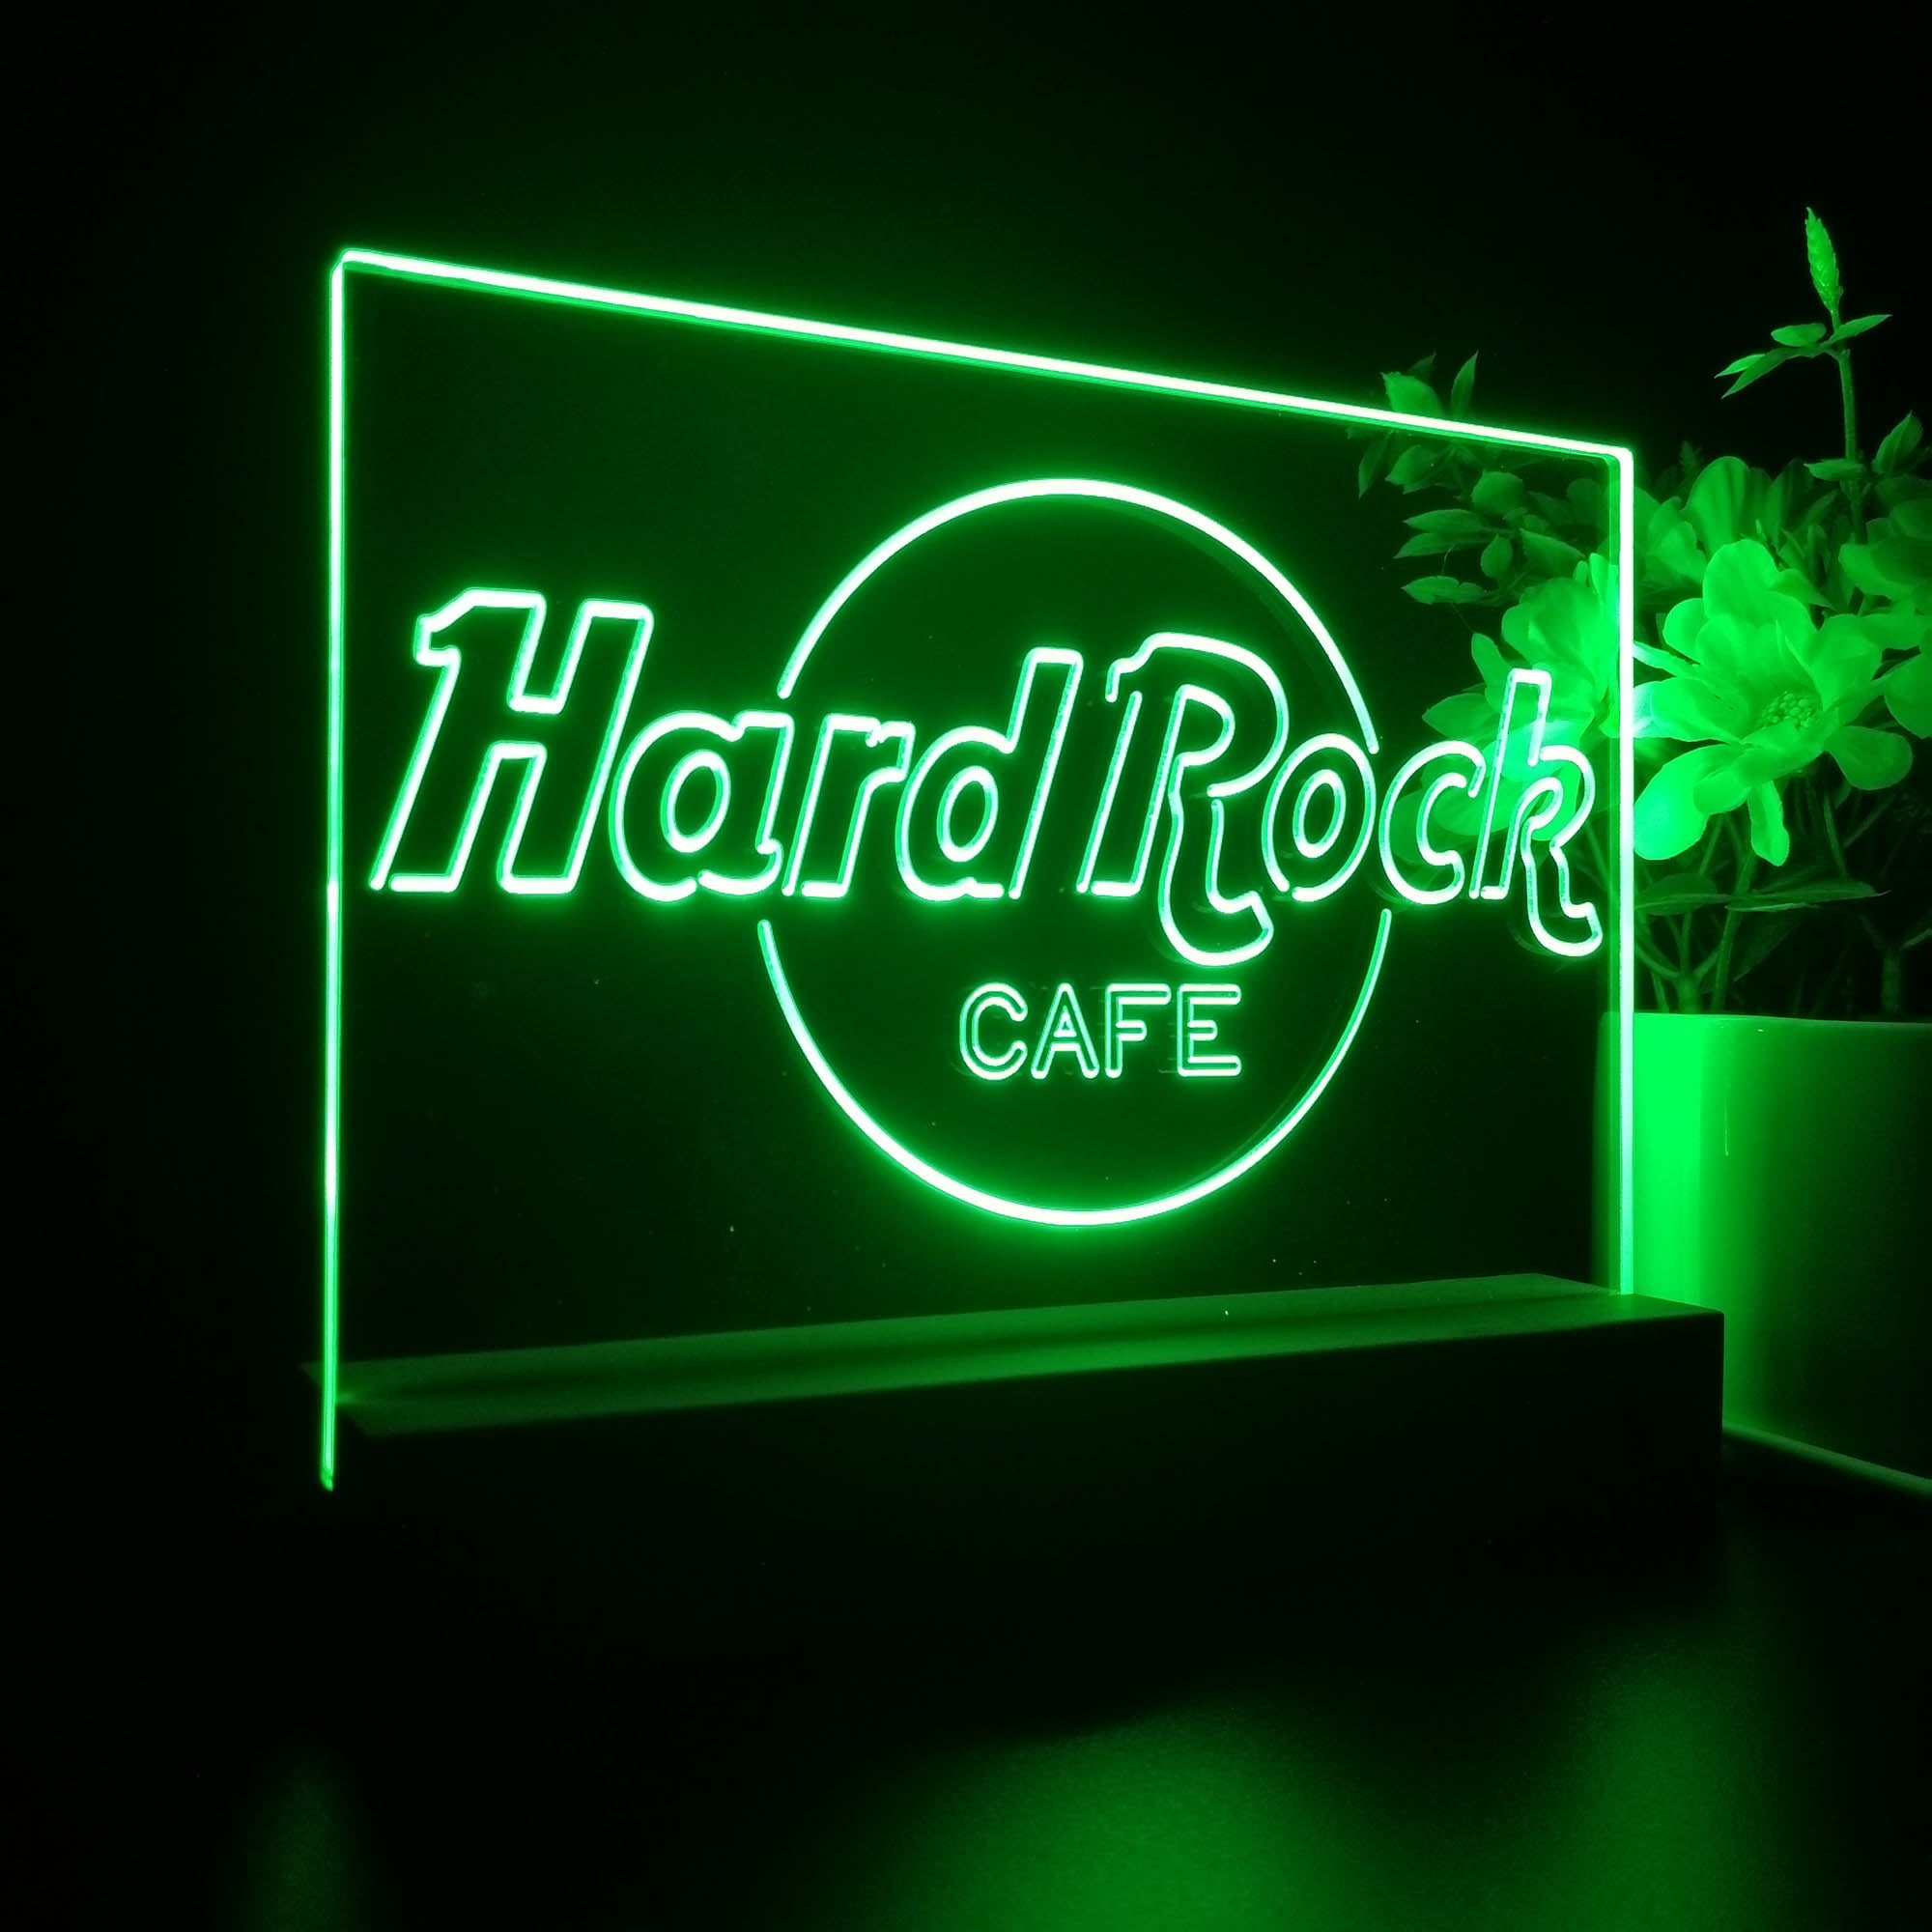 Hard Rock Café Restaurant Night Light LED Sign